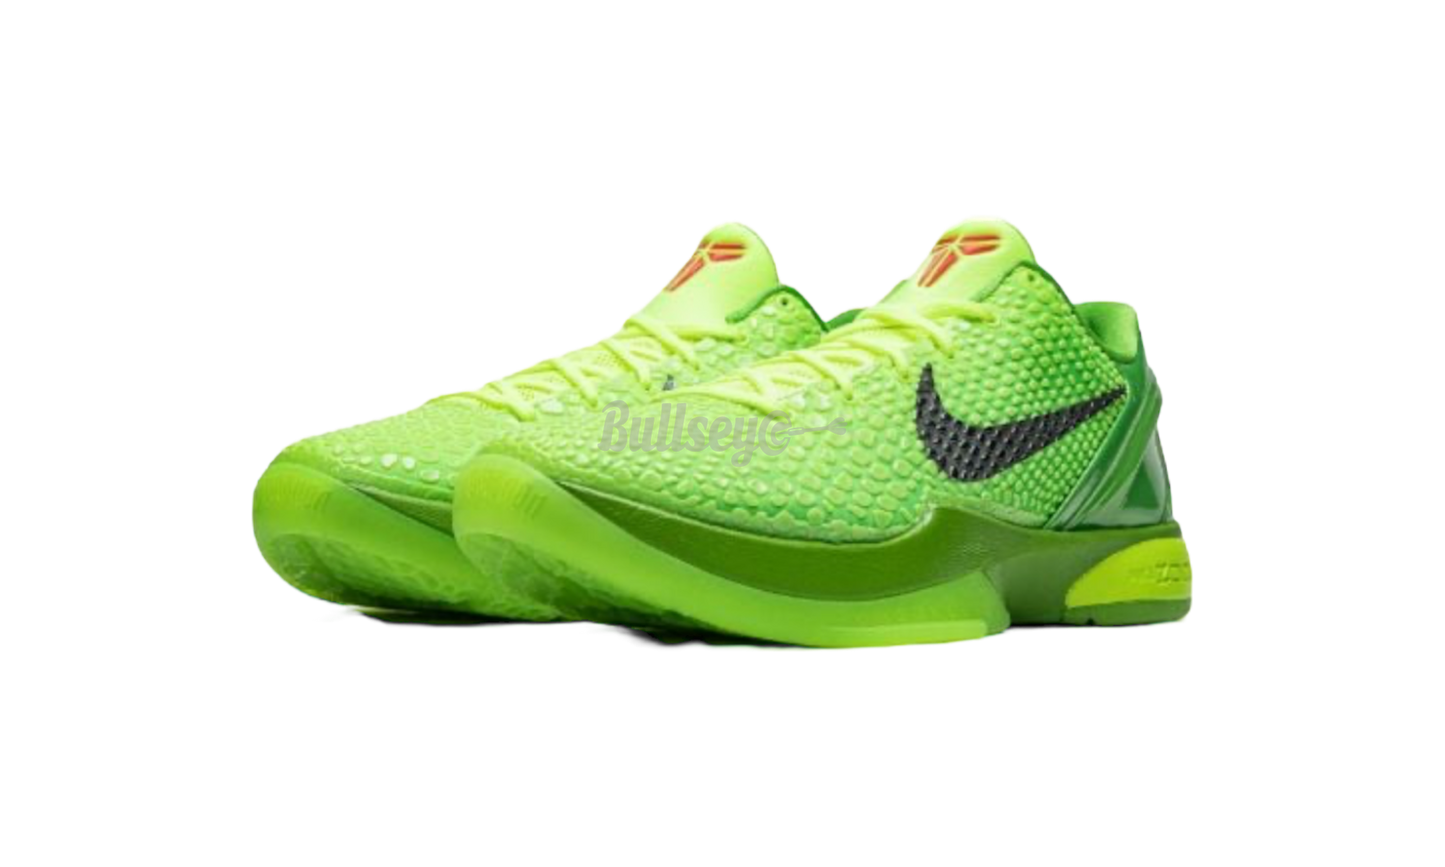 Nike Kobe 6 Protro "Grinch”